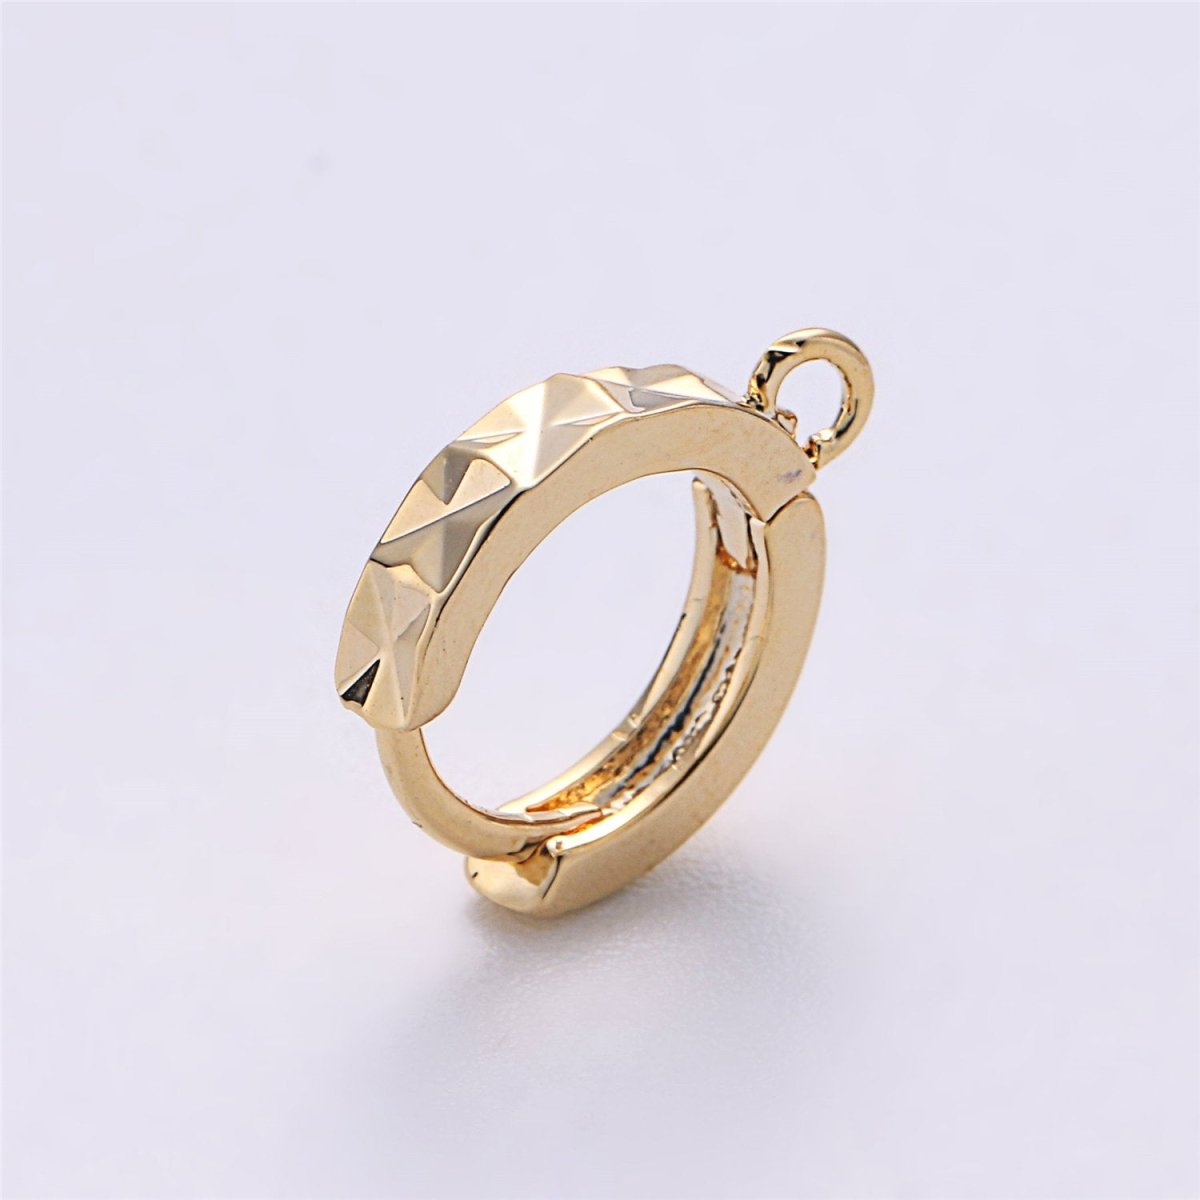 18k Gold Filled one touch w/ open link Lever back earring making, 12x15 mm, Nickel free Lead Free for Earring Charm Making Findings K-054 K-070 K-106 - DLUXCA